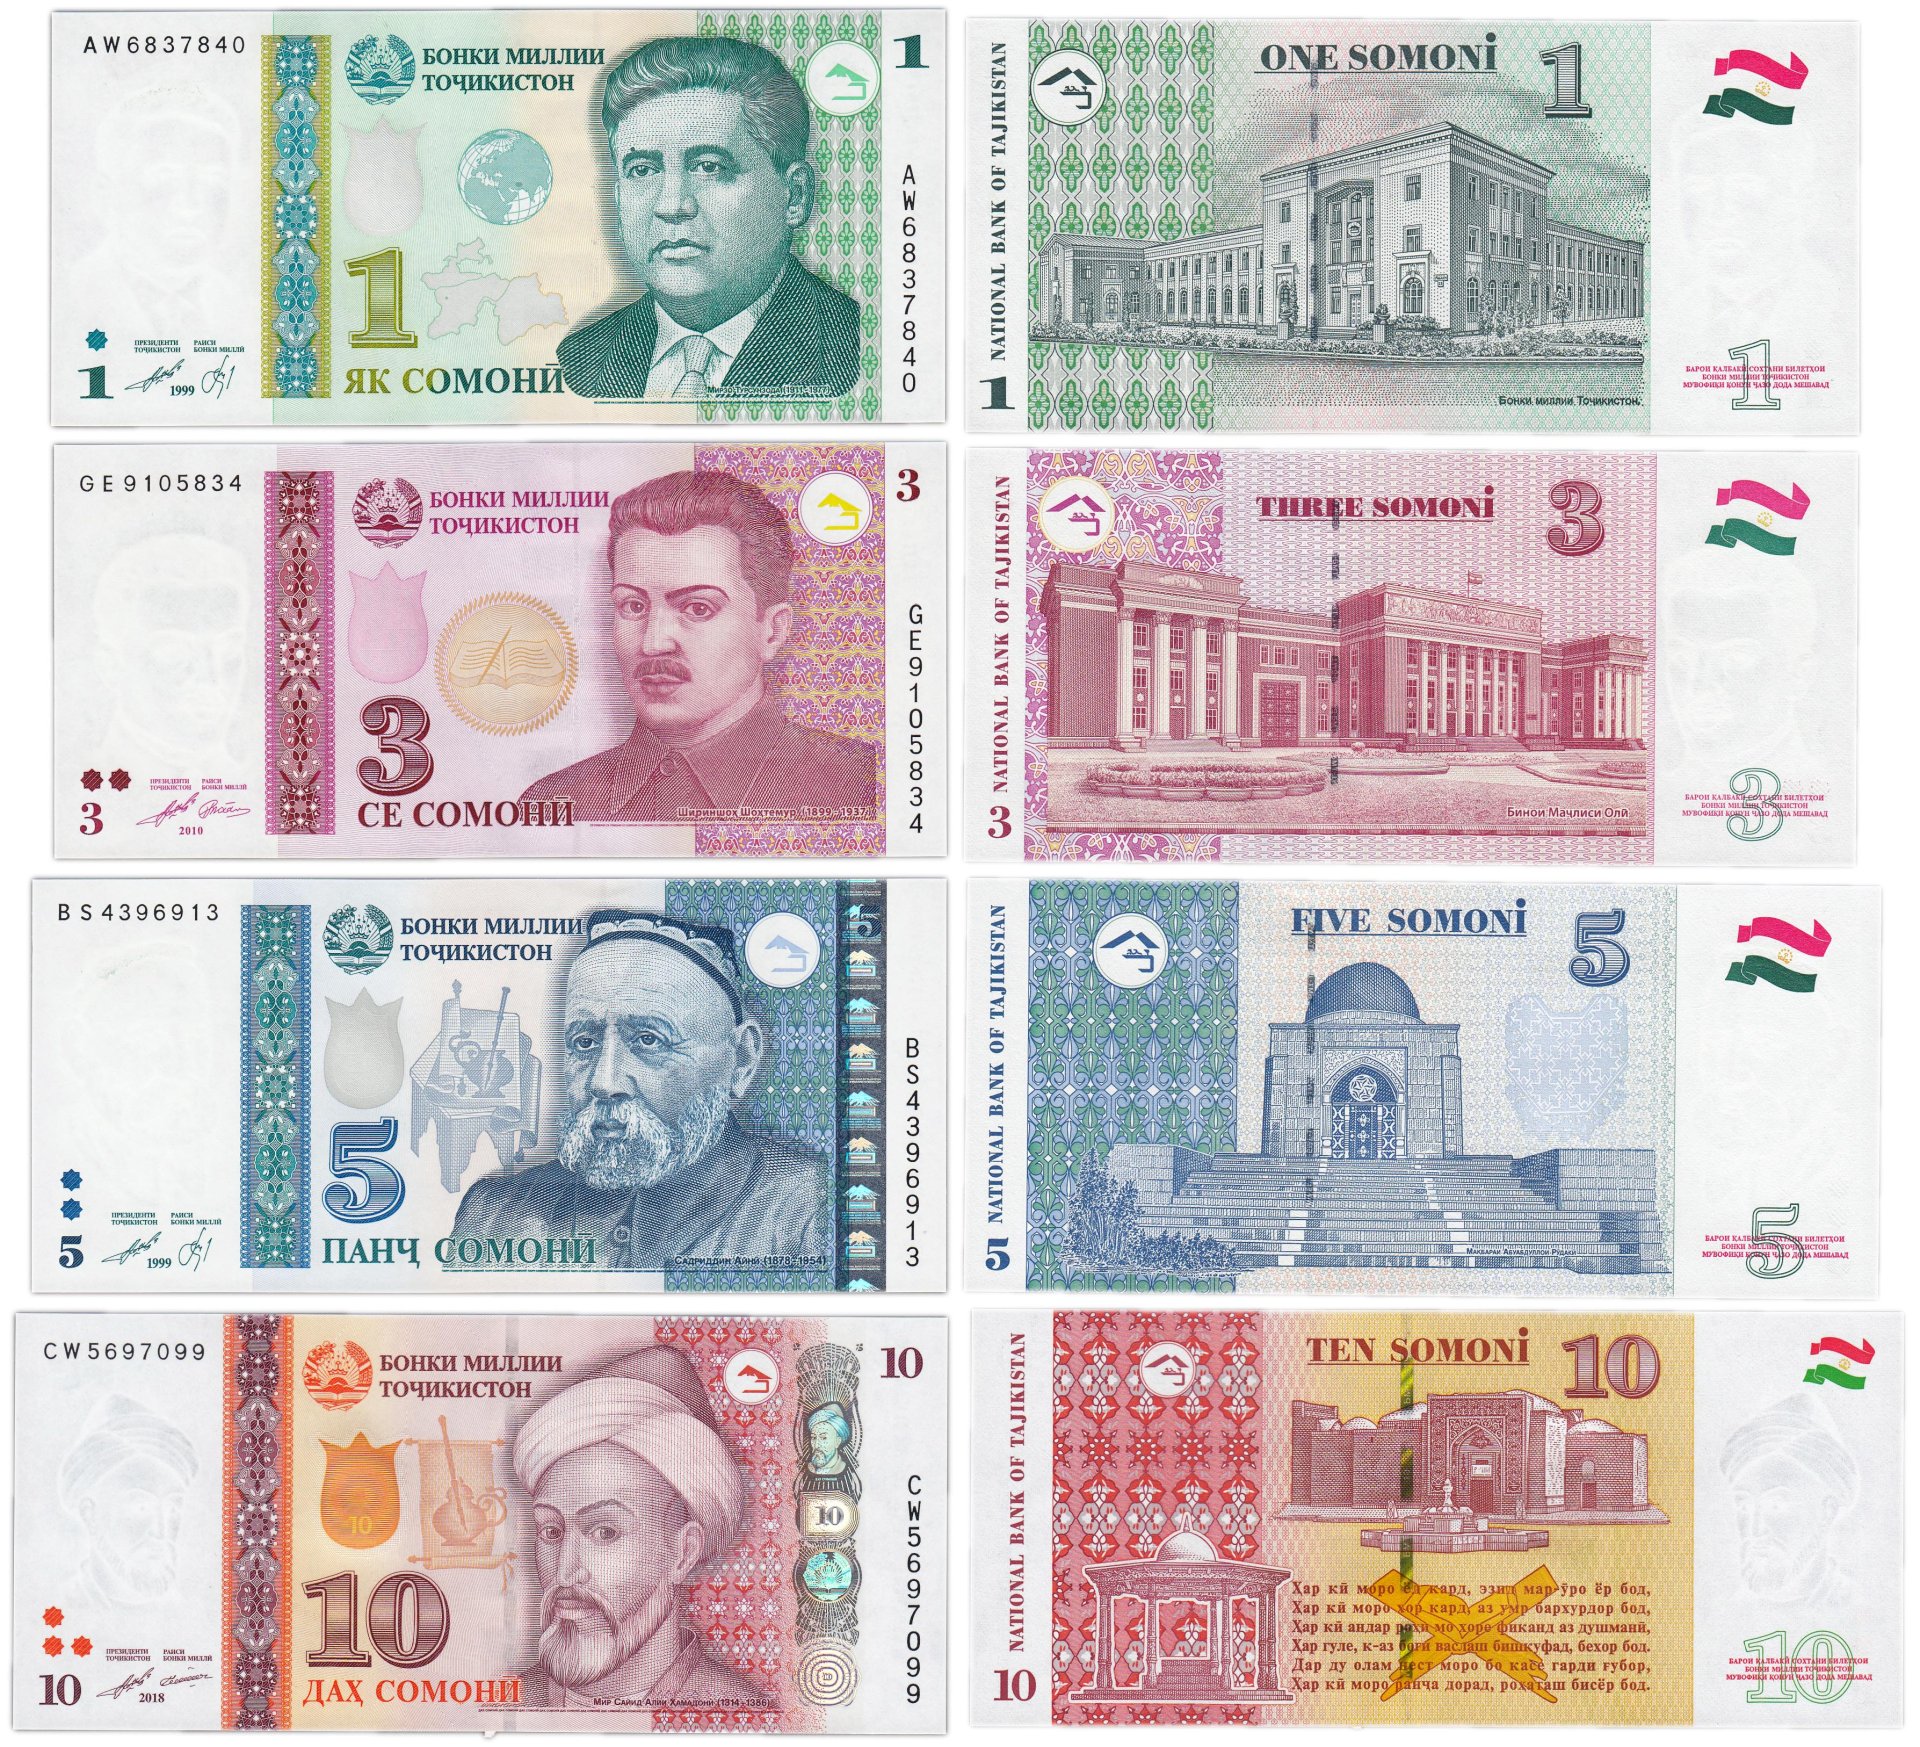 500 сомони в рублях на сегодня. 1 Сомони Таджикистан купюра. Банкноты Сомони 1999 набор. Деньги Таджикистана 100 сомонй. 1 Сомони 1999 Таджикистан.